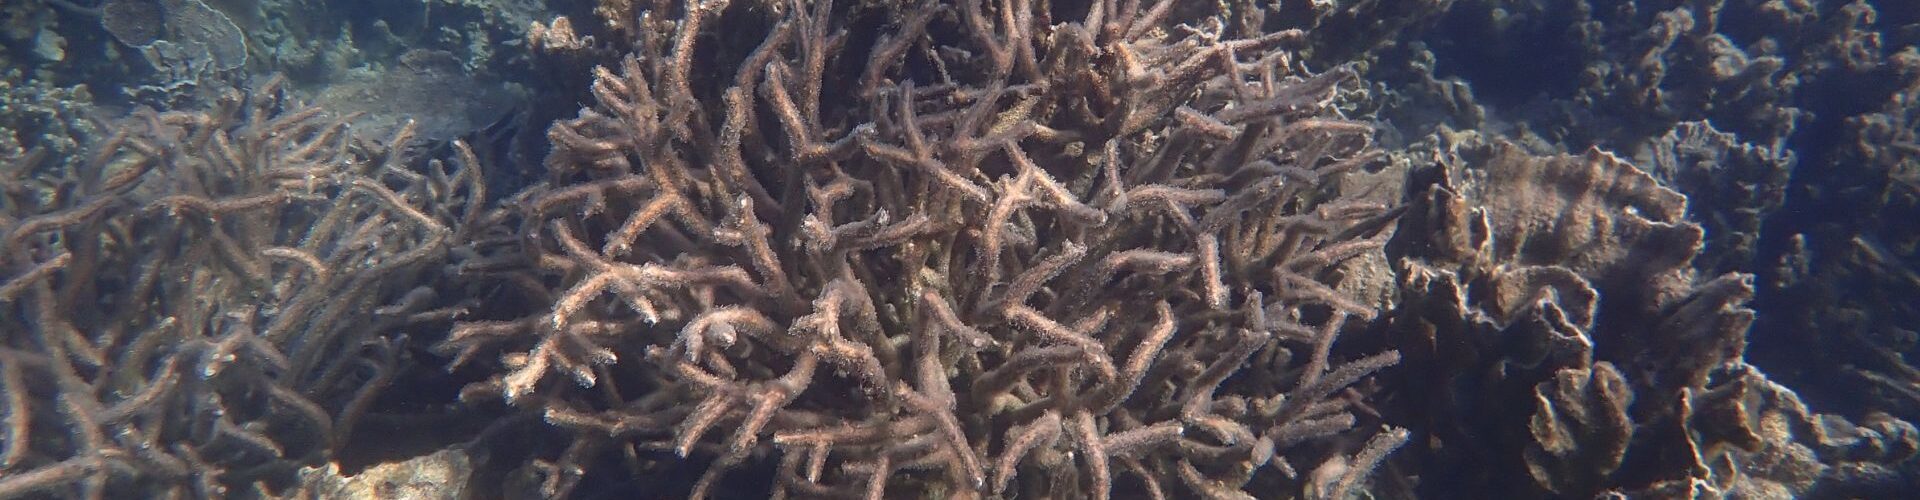 Image for History repeats as Coral Bay faces mass loss of coral and fish life